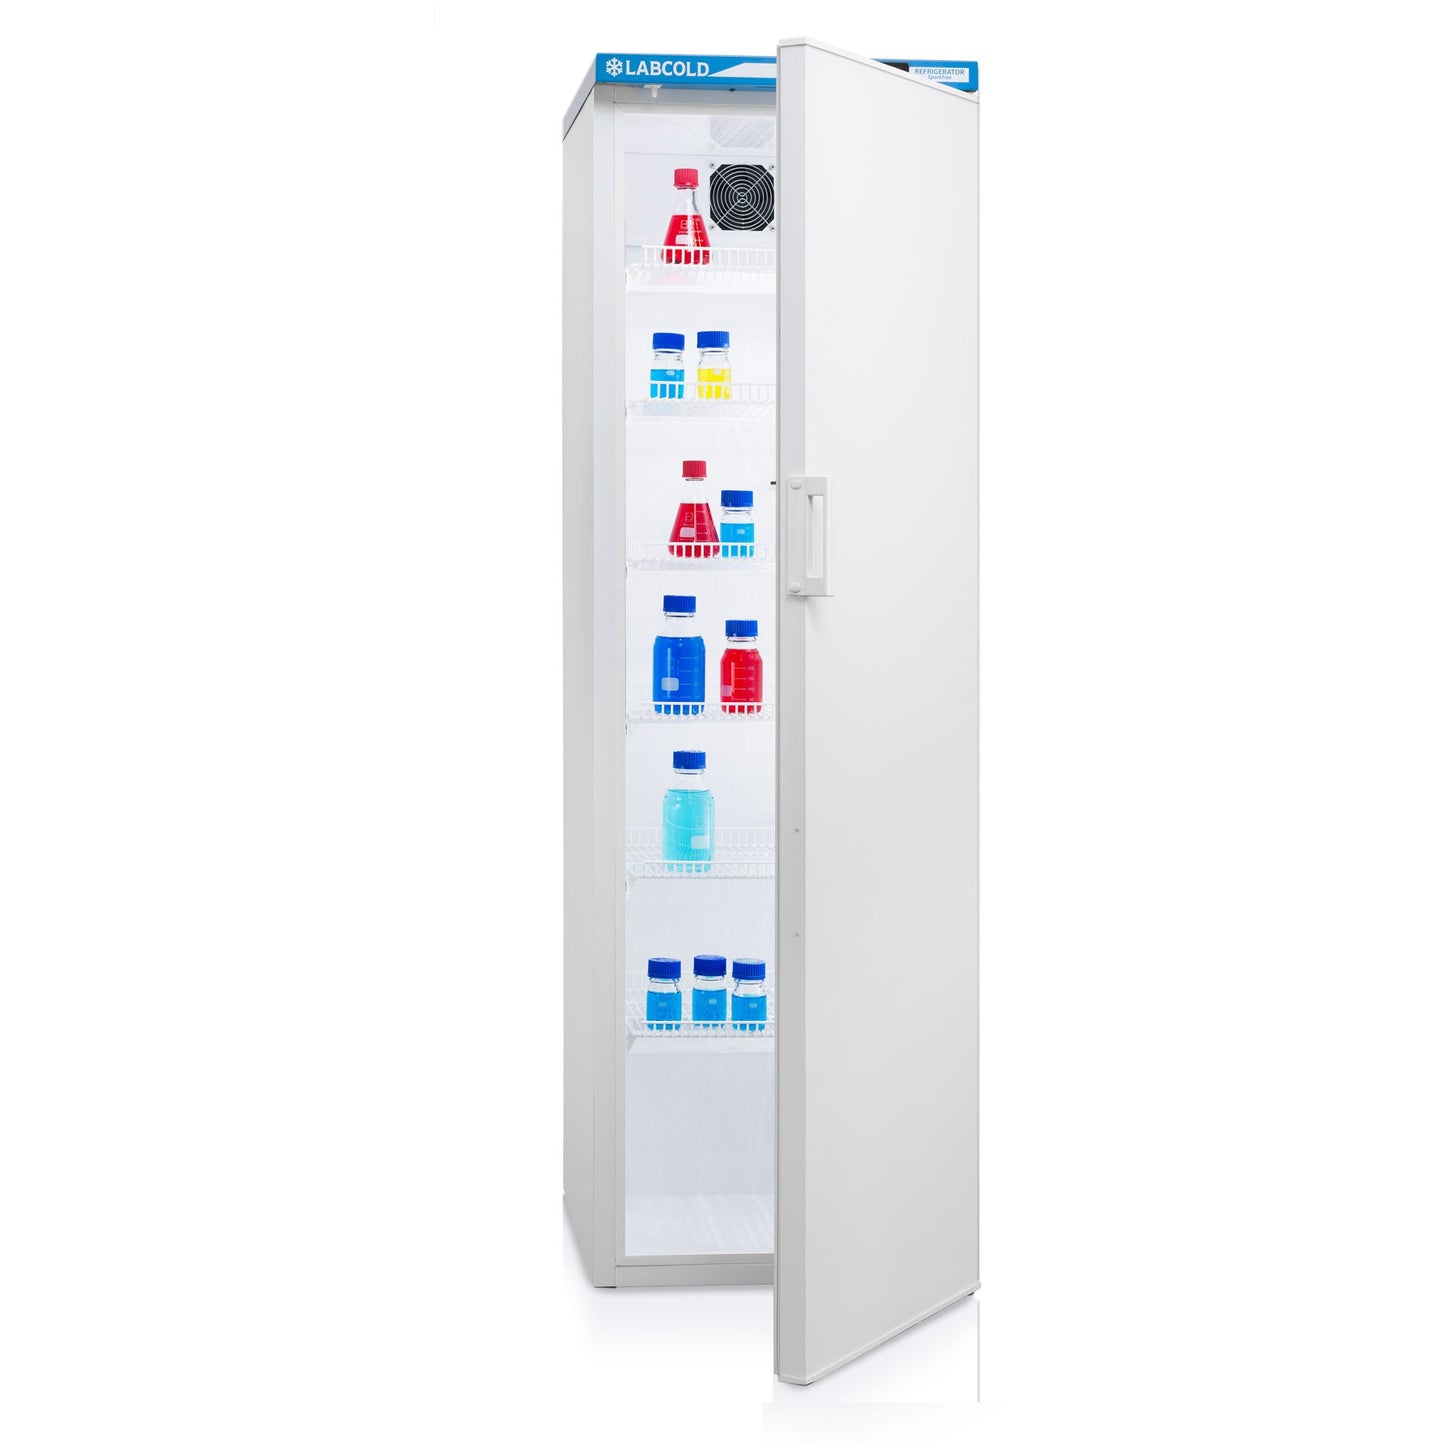 Labcold Sparkfree Refrigerator - 439 Litres - Upright - RLPR1517